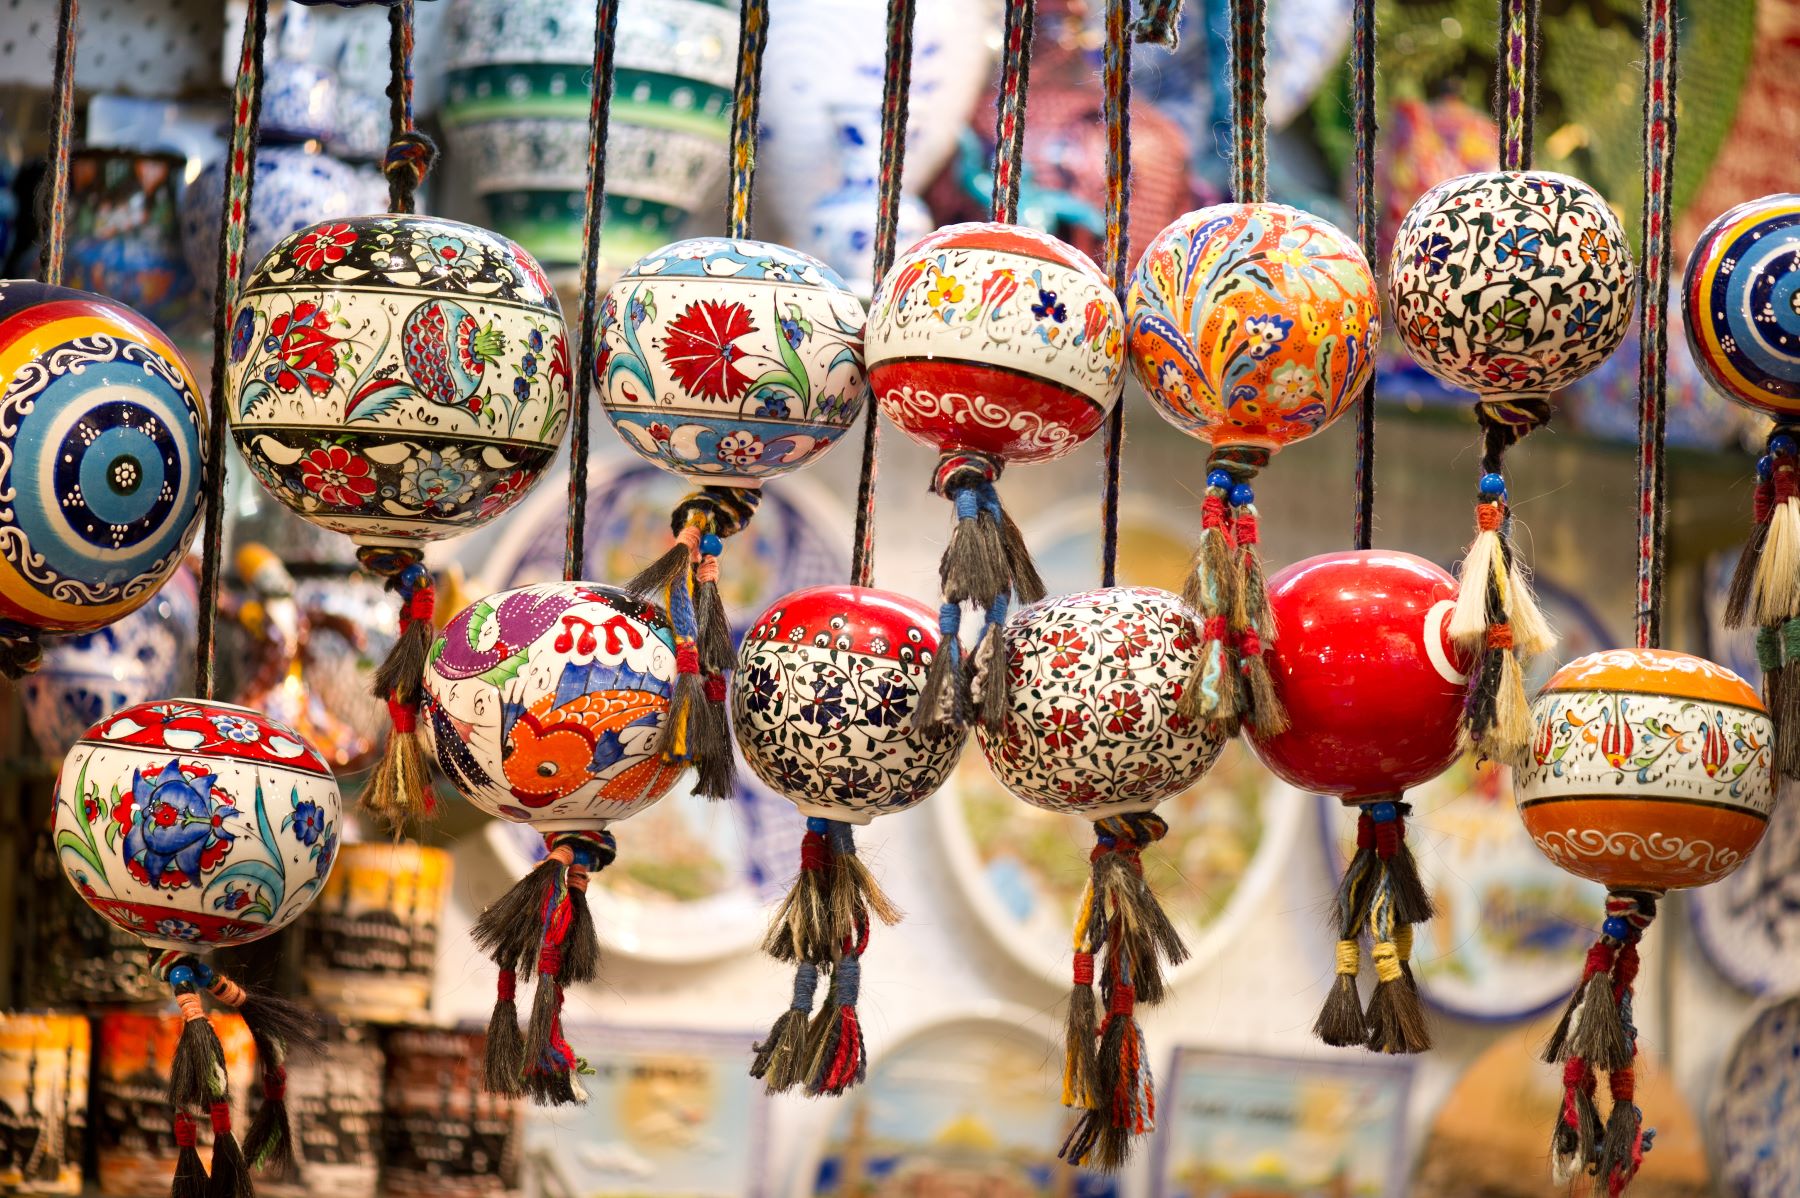 Hanging ornaments in Istanbul's Grand Bazaar